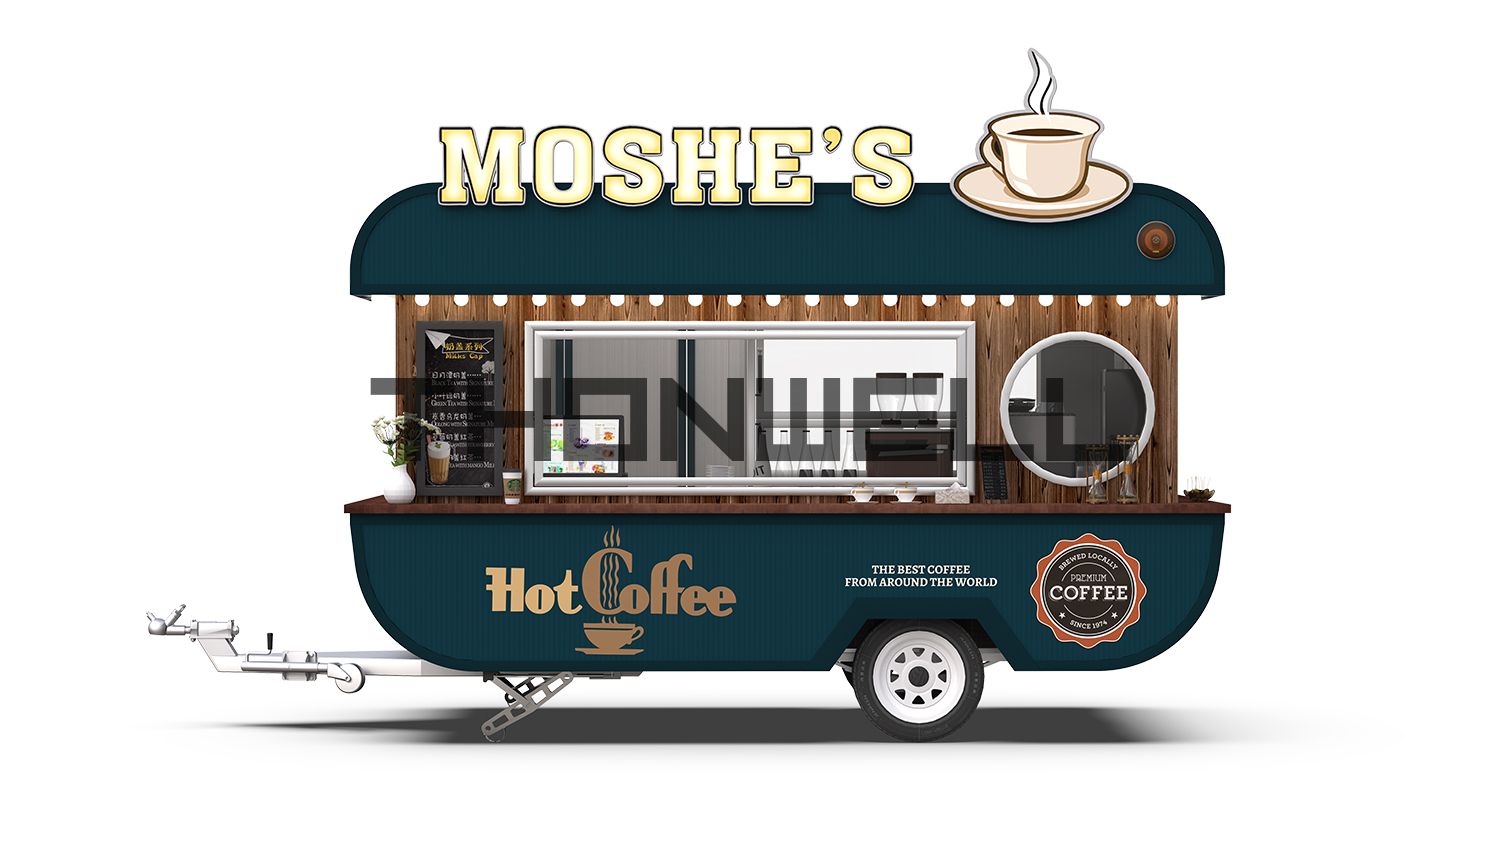 Food cart  food truck trailer of MOSHE-44